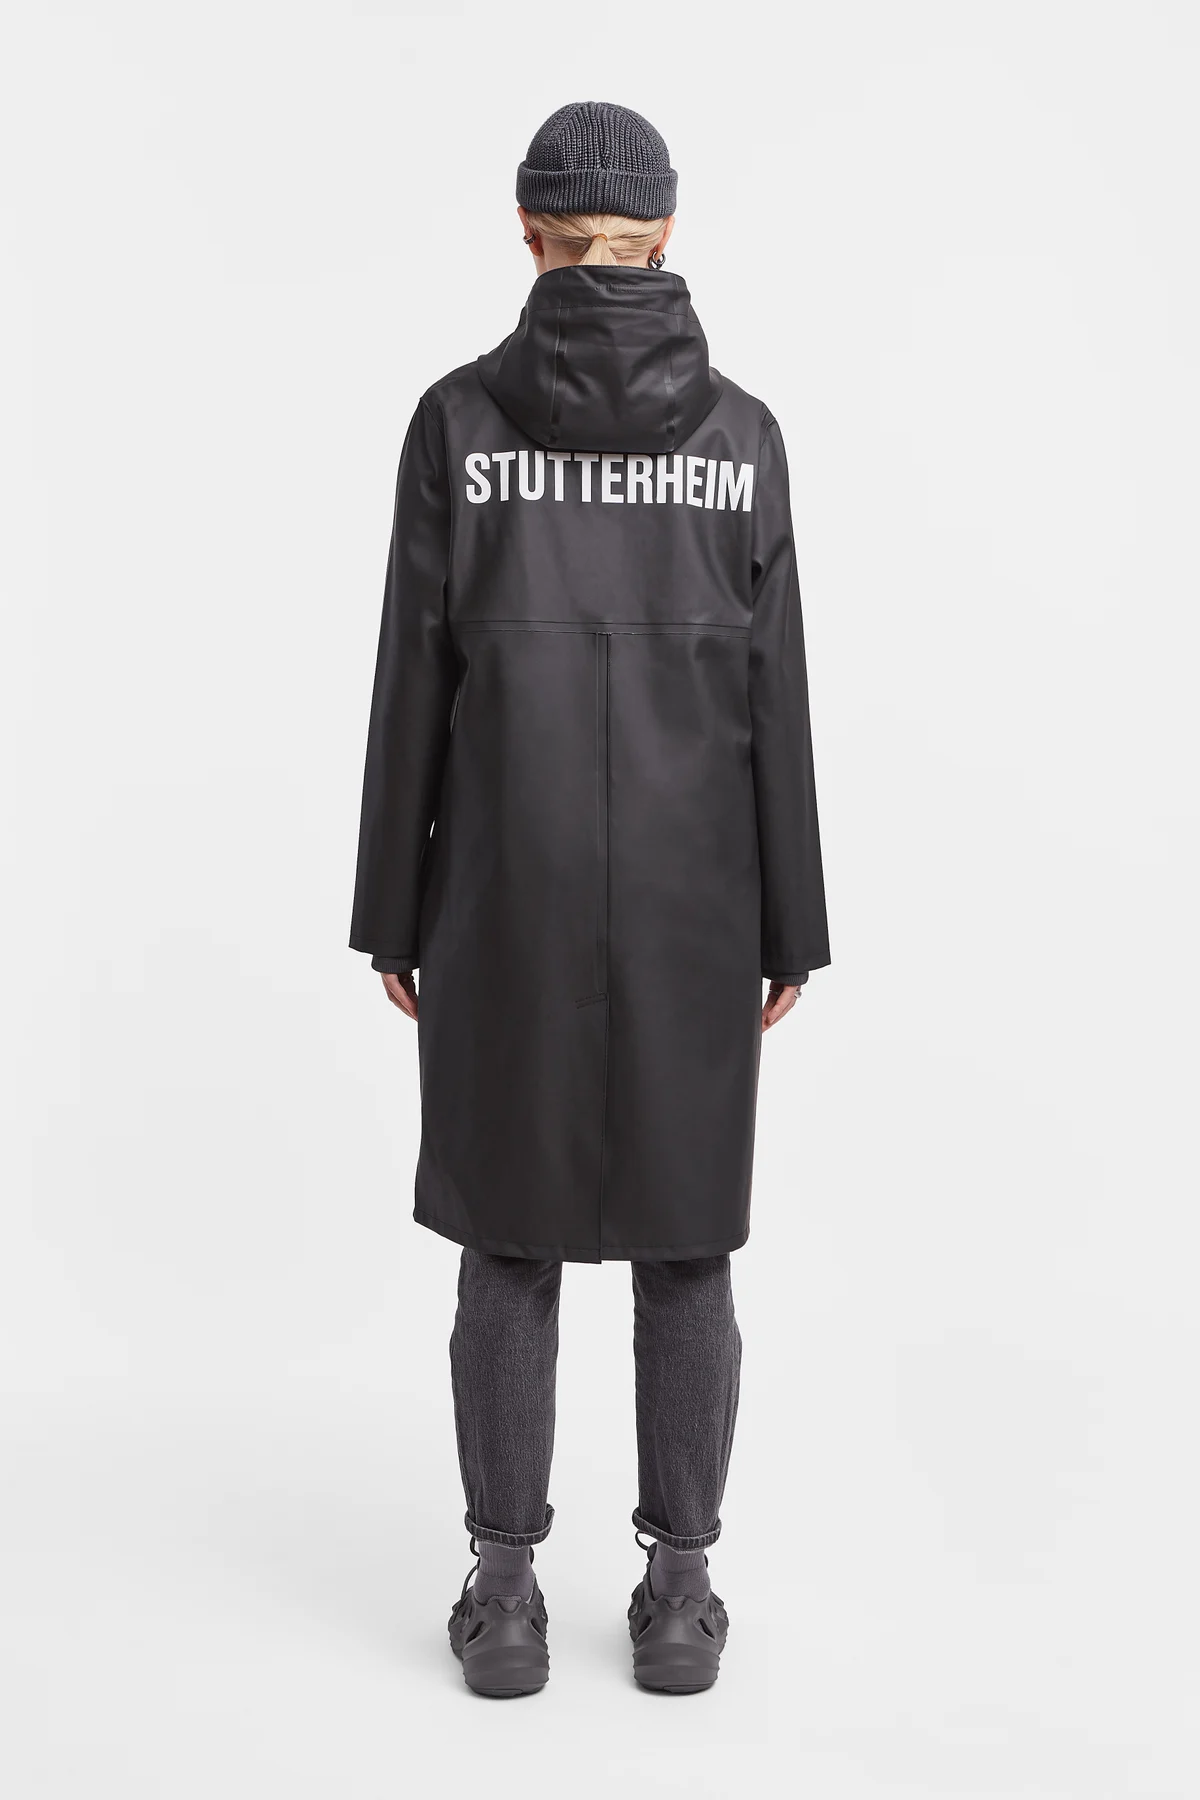 Stutterheim Stutterheim Stockholm Long Print Raincoat Black